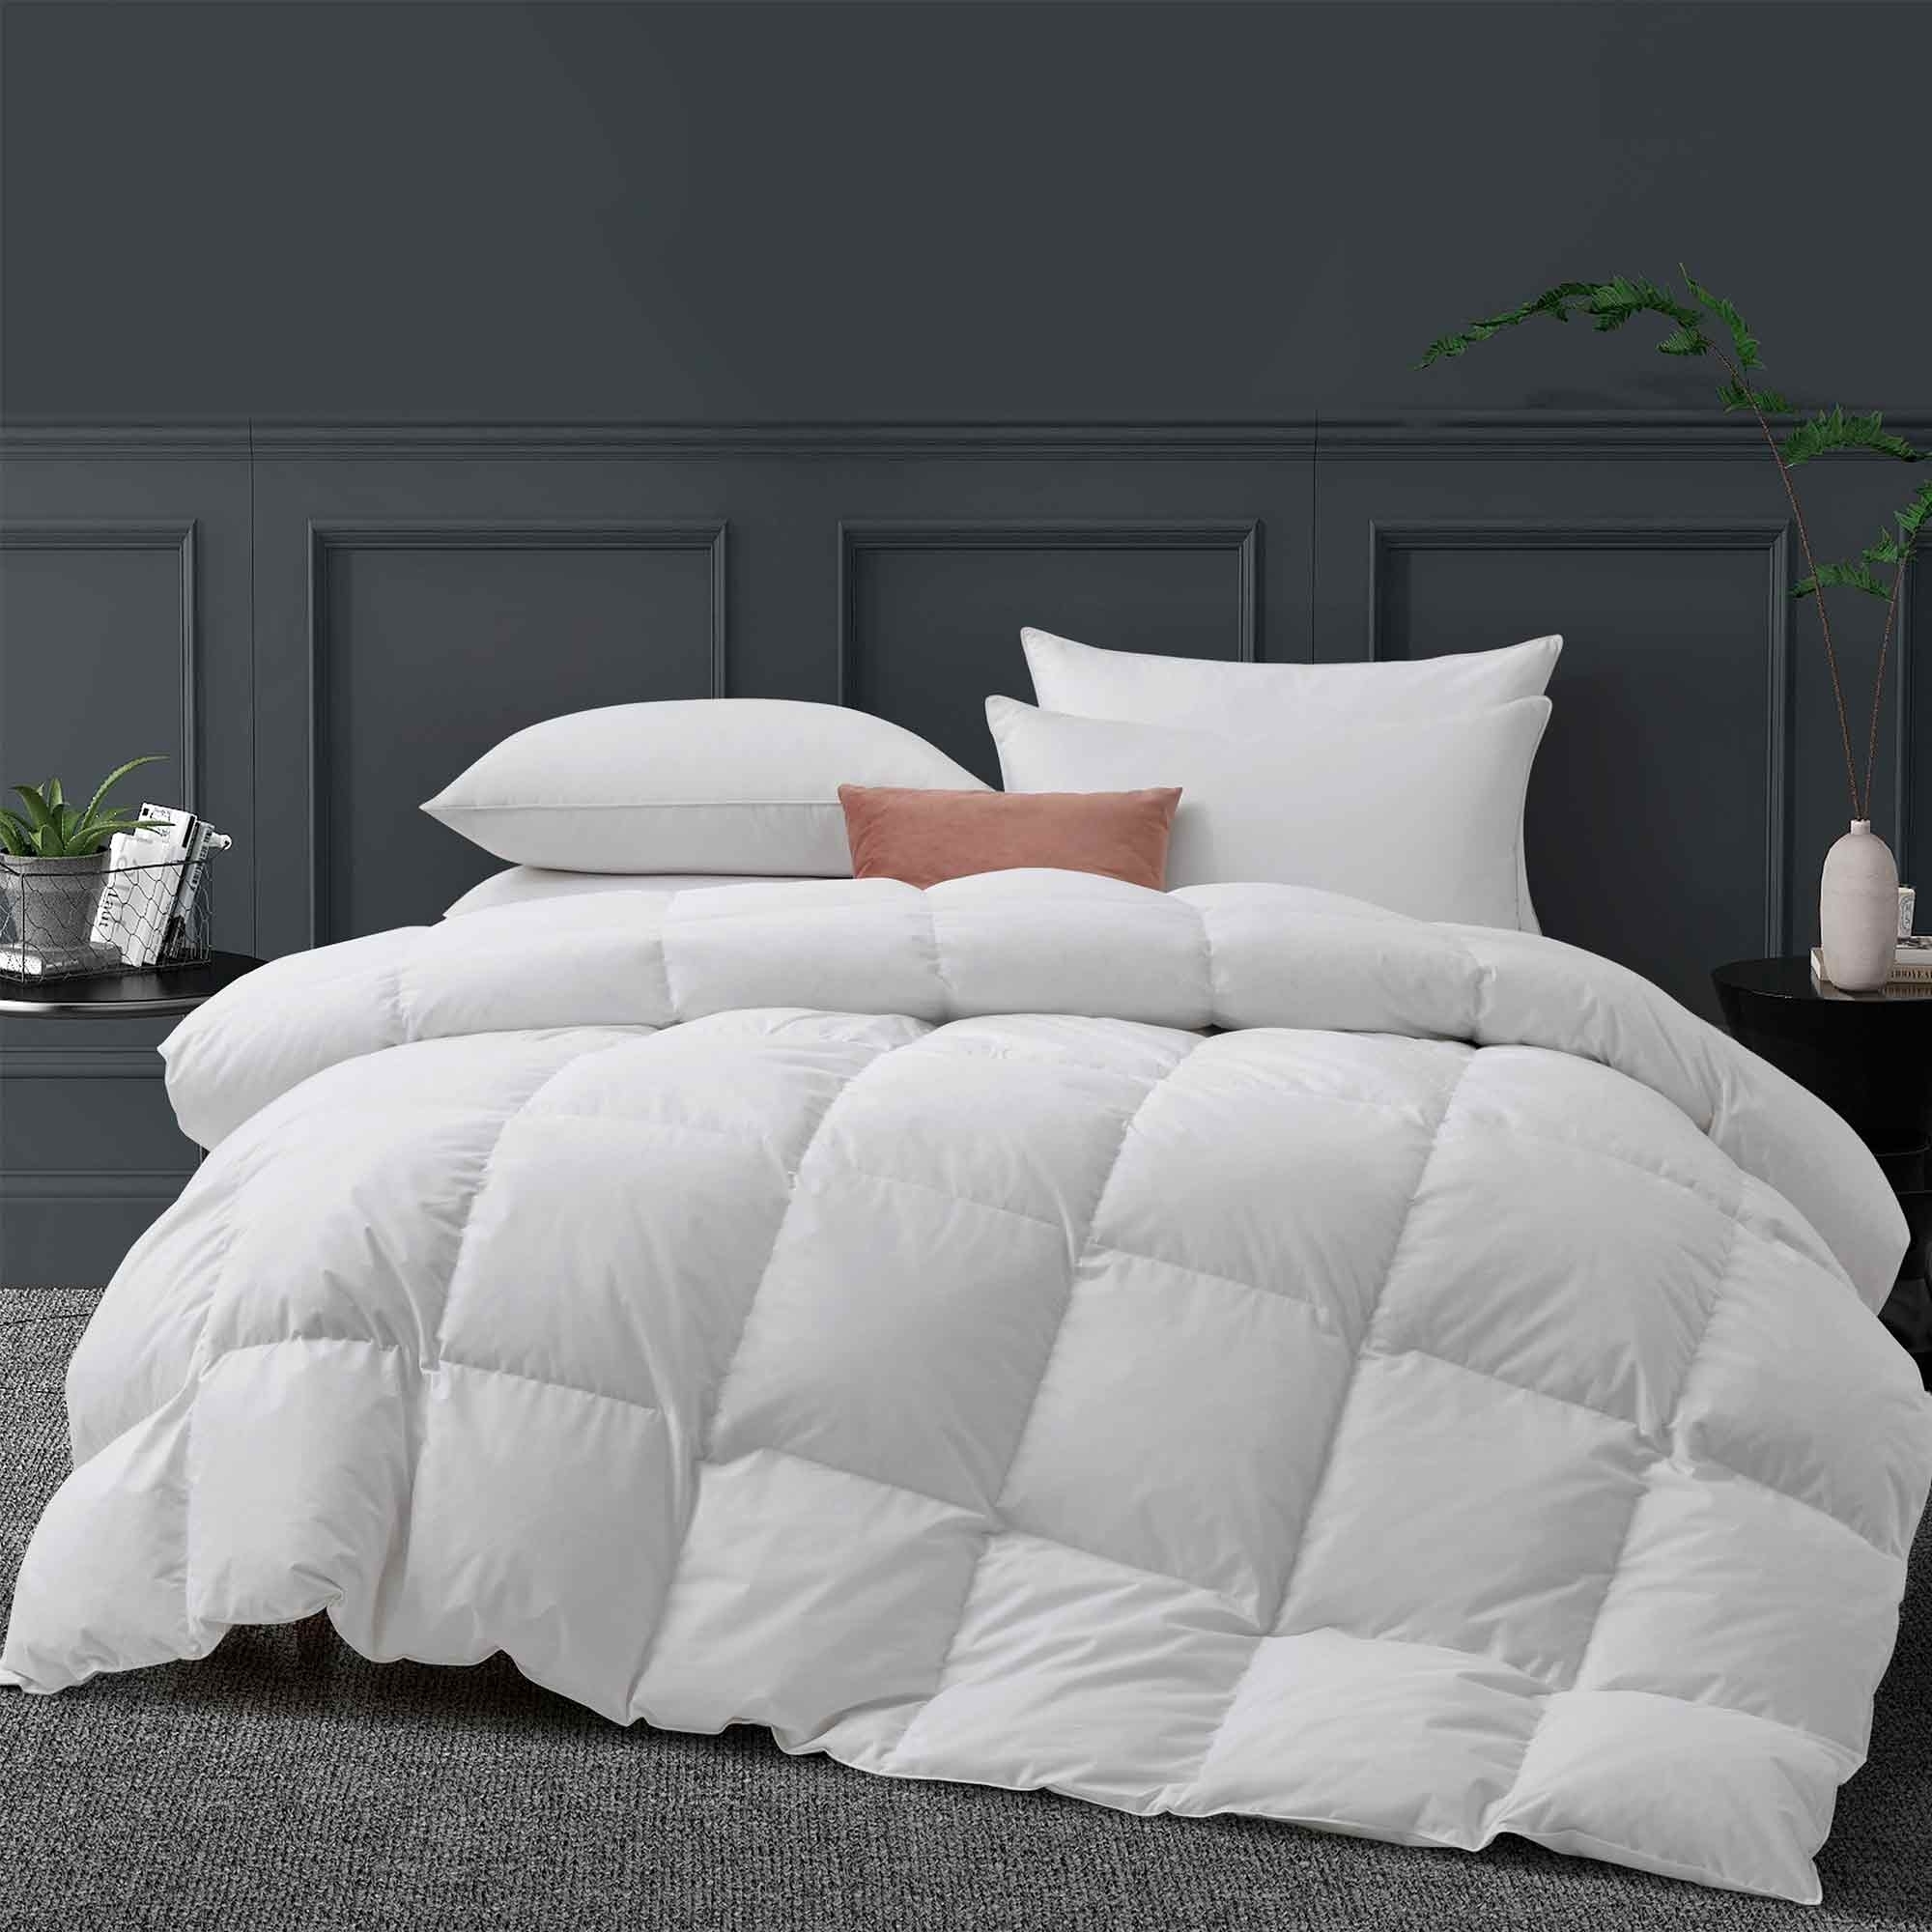 White Goose Feather And Down Comforters, Lightweight And Medium Weight Duvet Insert - Lightweight, Full/Queen